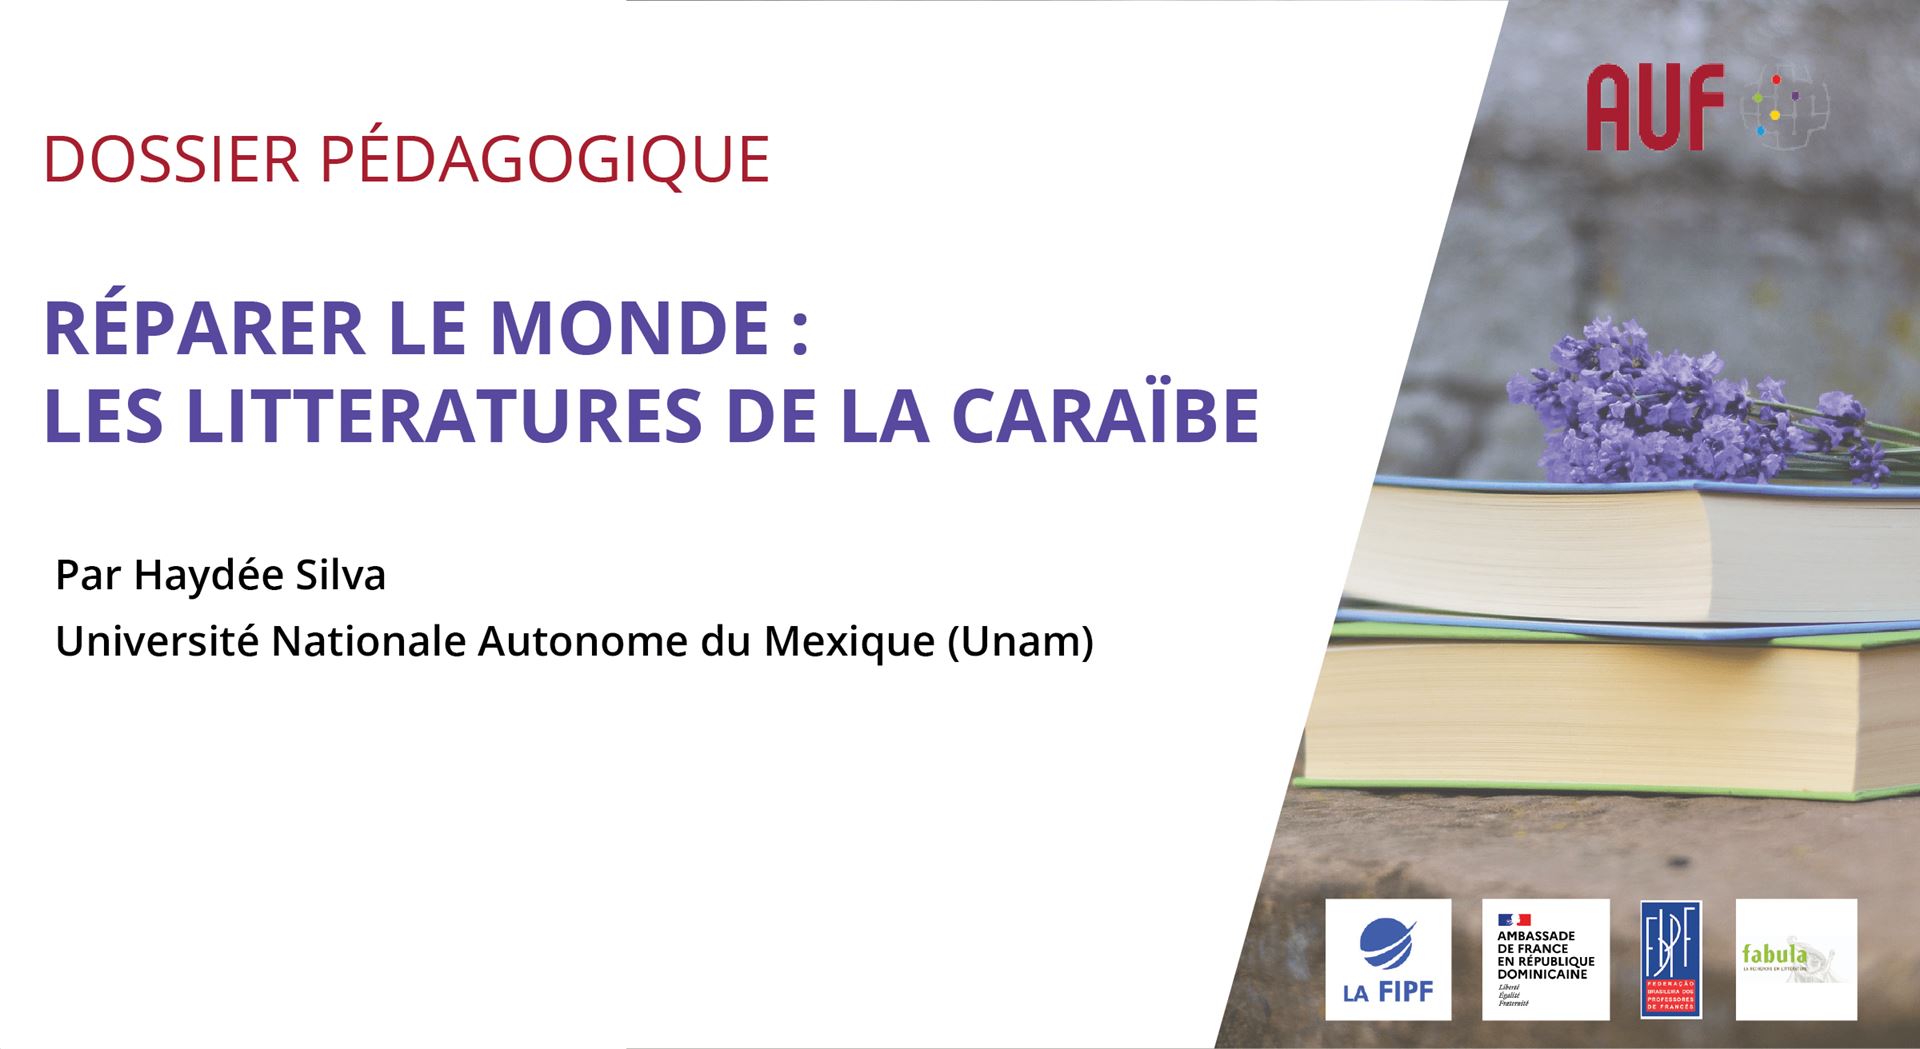 3 -Dossier pedagogique AUF Caraibe